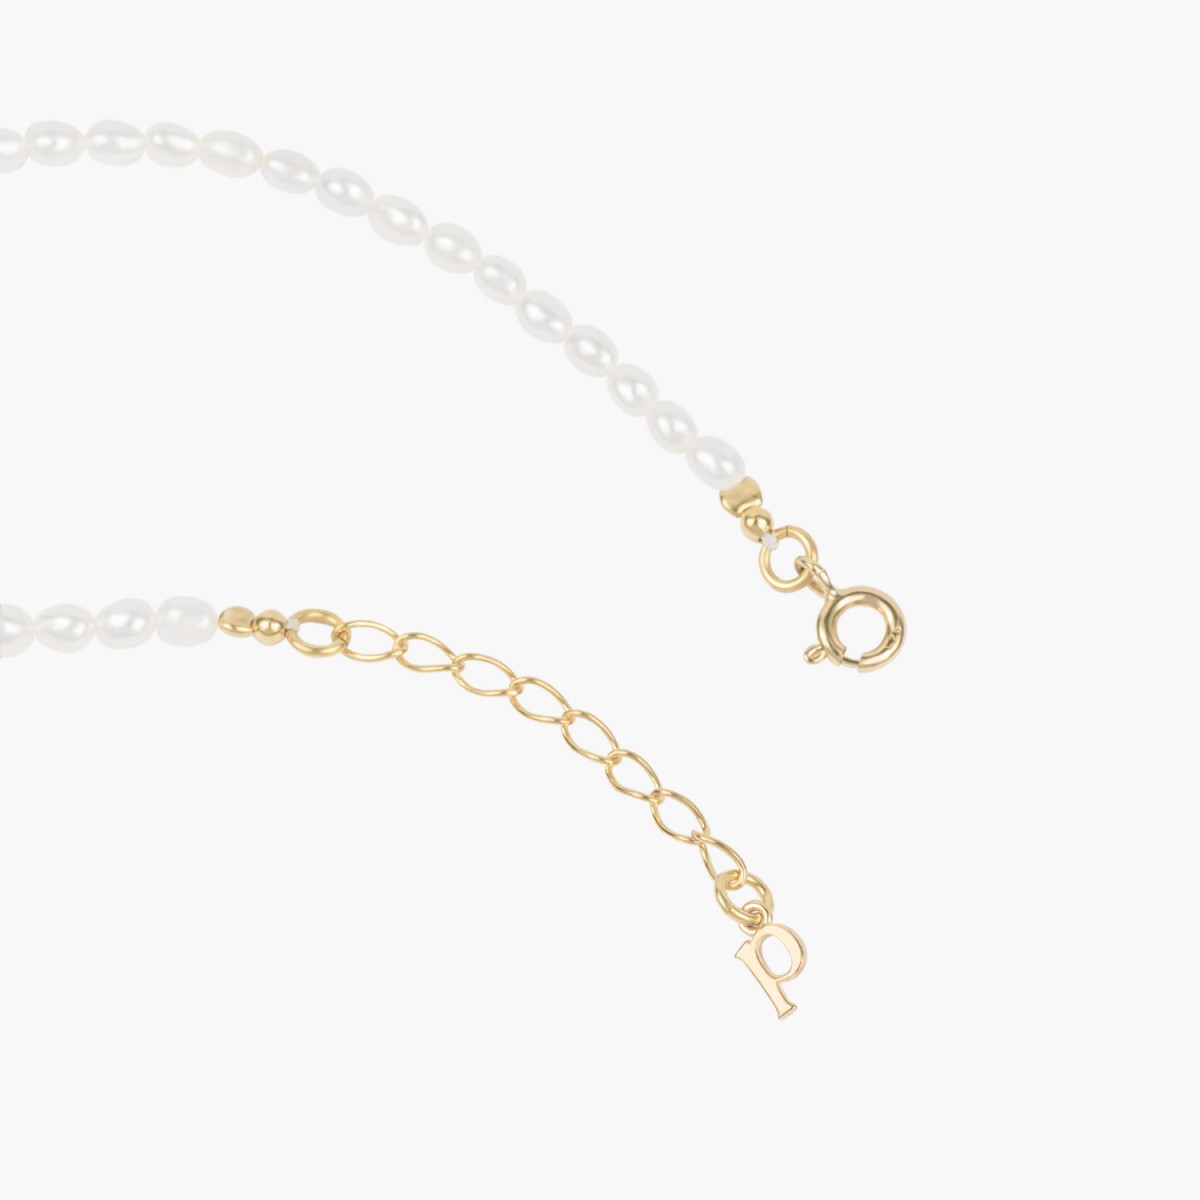 Flower Pearl Bracelet | Armband aus Süßwasserperlen | Paeoni Colors